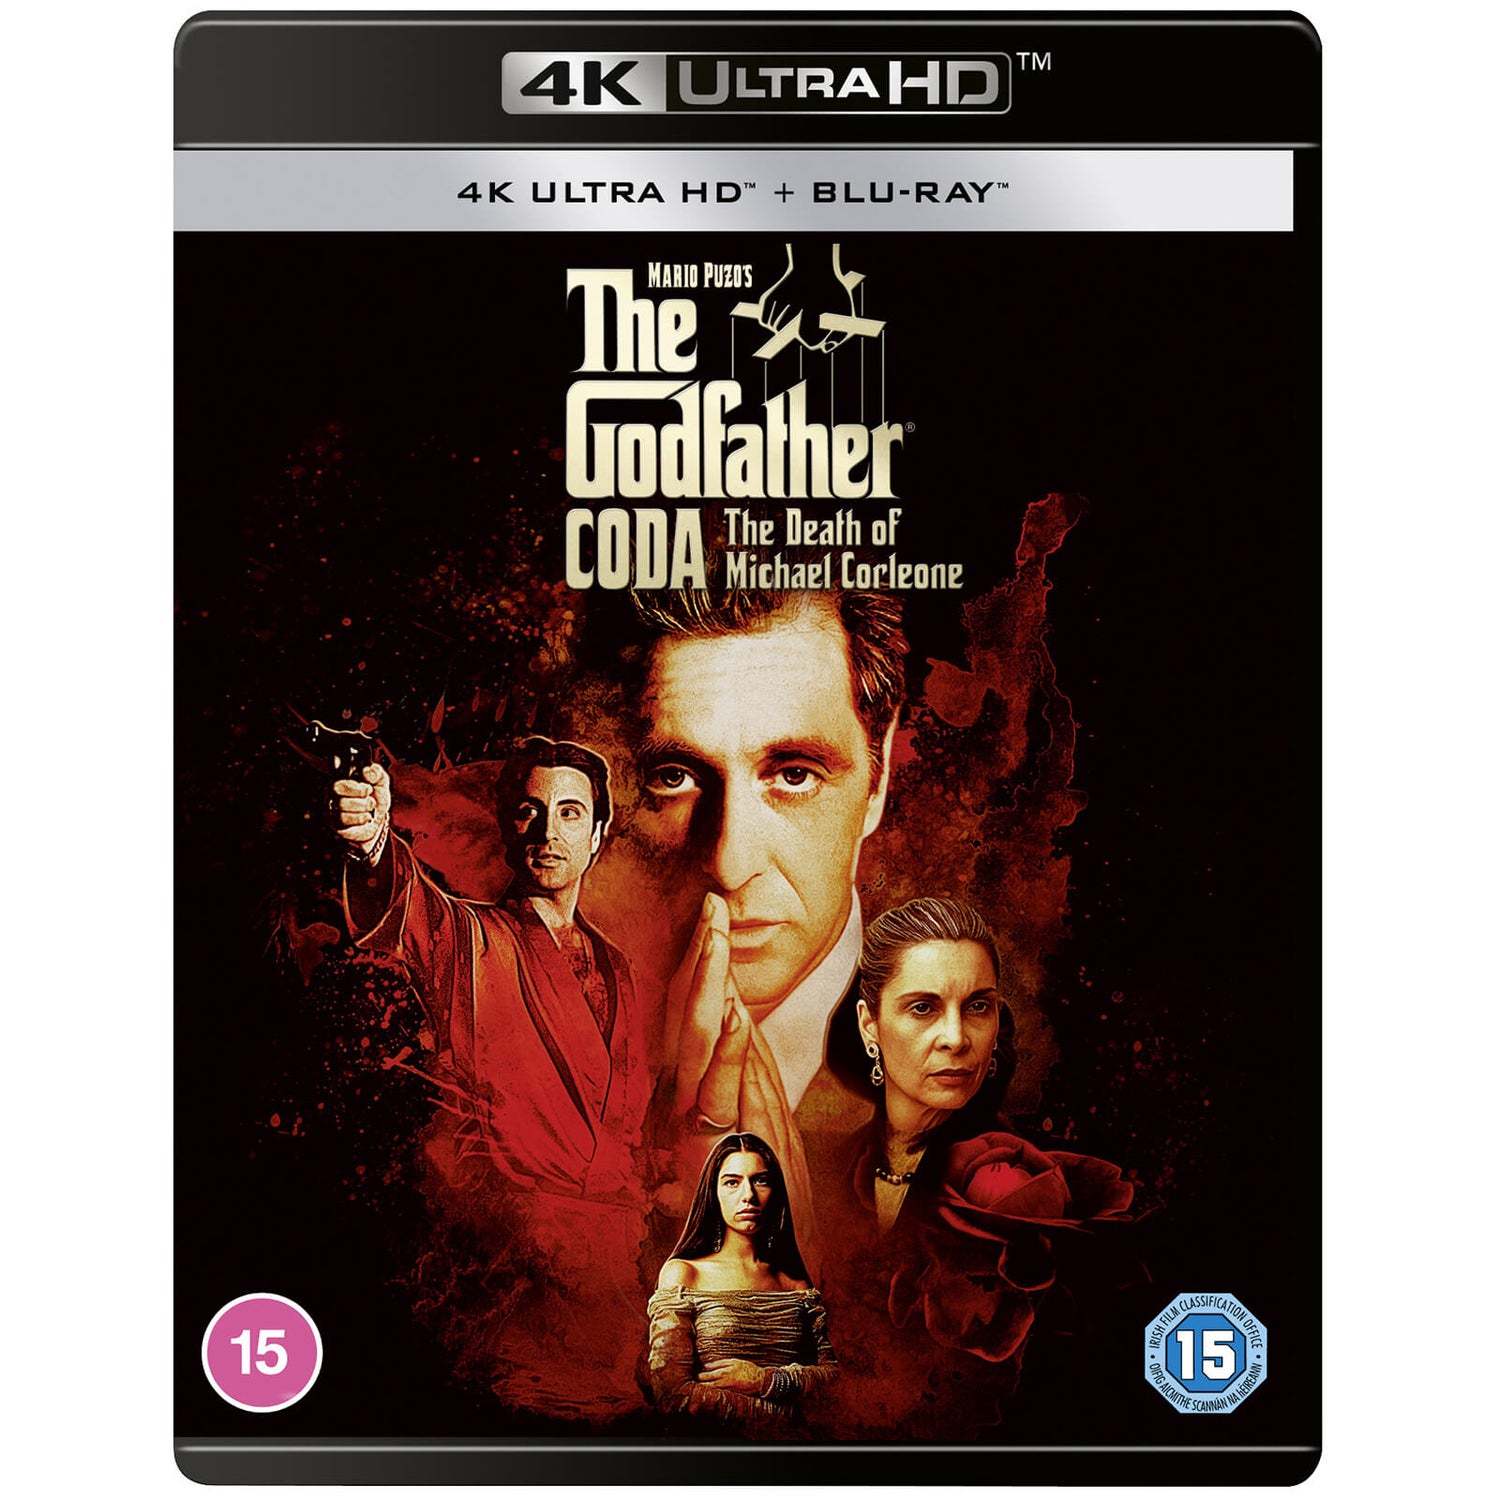 The Godfather Coda 4K Ultra HD (Includes Blu-ray)